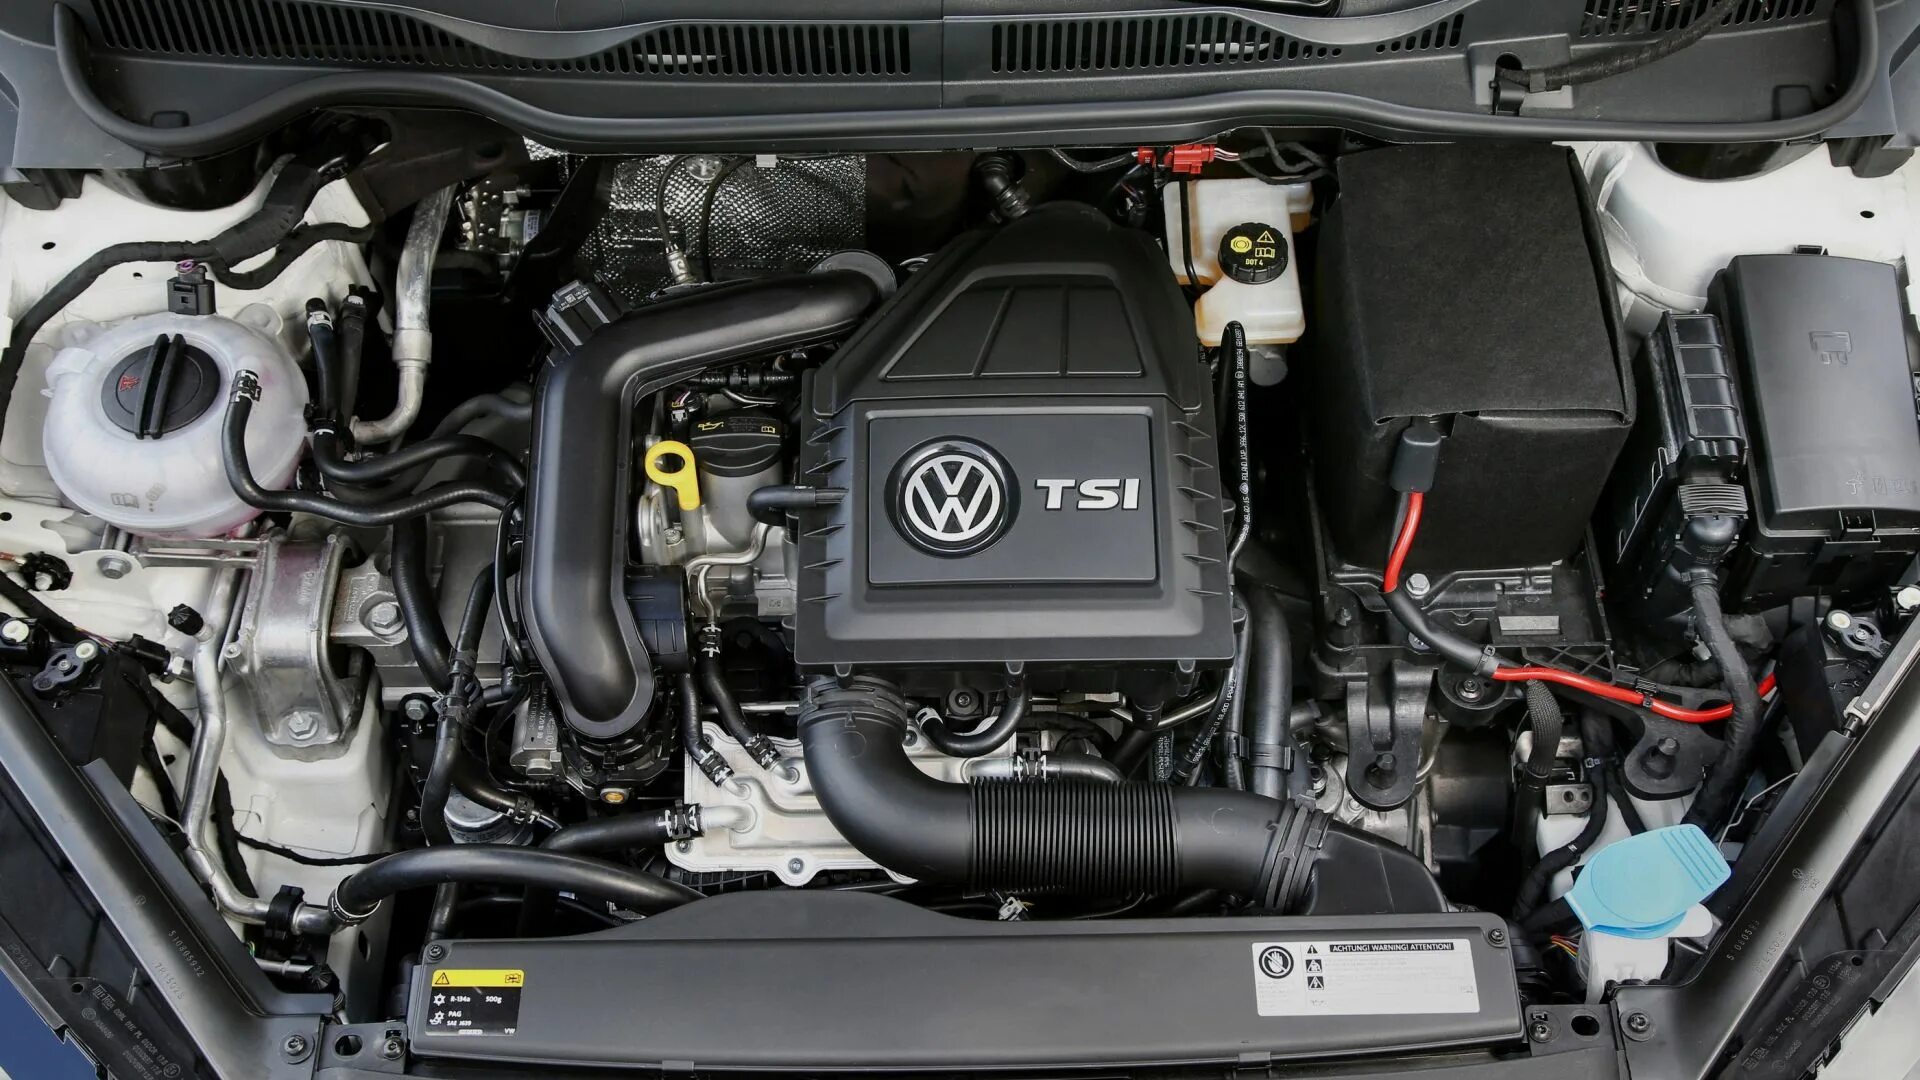 Volkswagen Golf 6 1.2 TSI. Volkswagen Golf TSI 1.2. Гольф плюс 1.2 TSI мотор. Гольф 6 мотор 1.2 TSI.